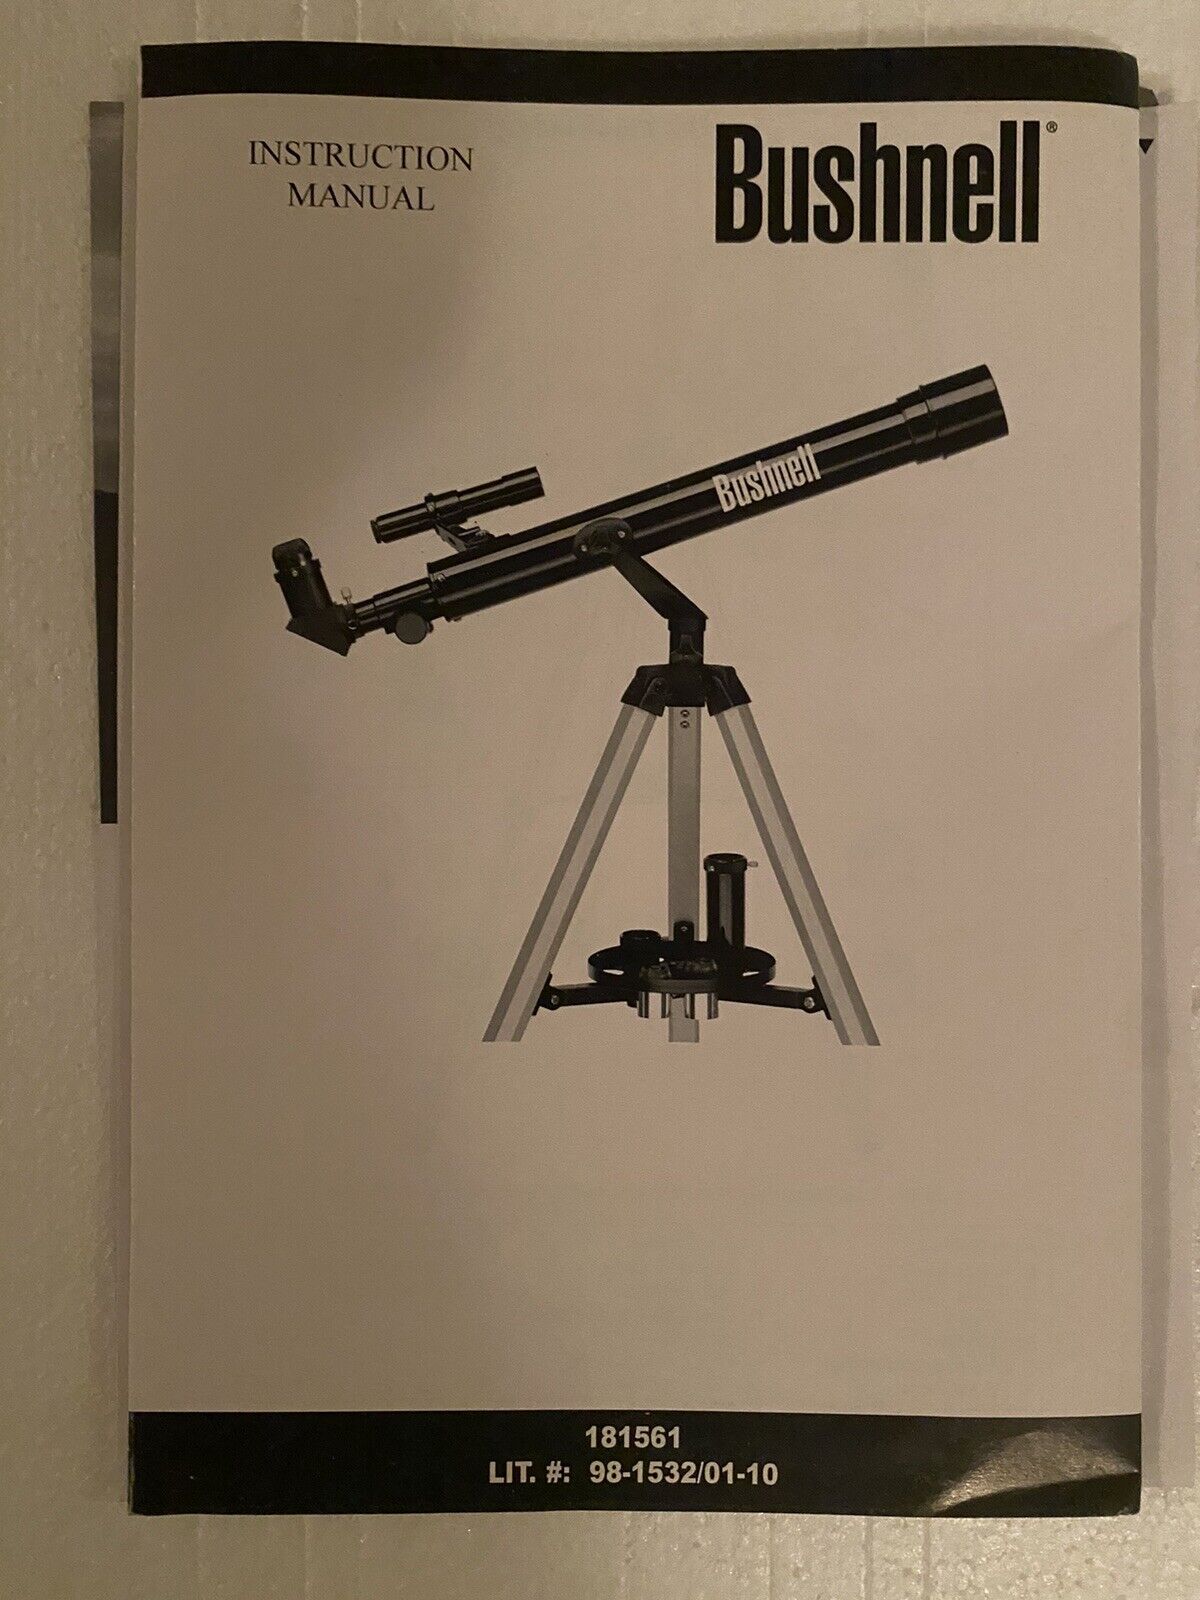 Bushnell Refractor 50 mm Telescope. Brand New Never Used. Opened Box